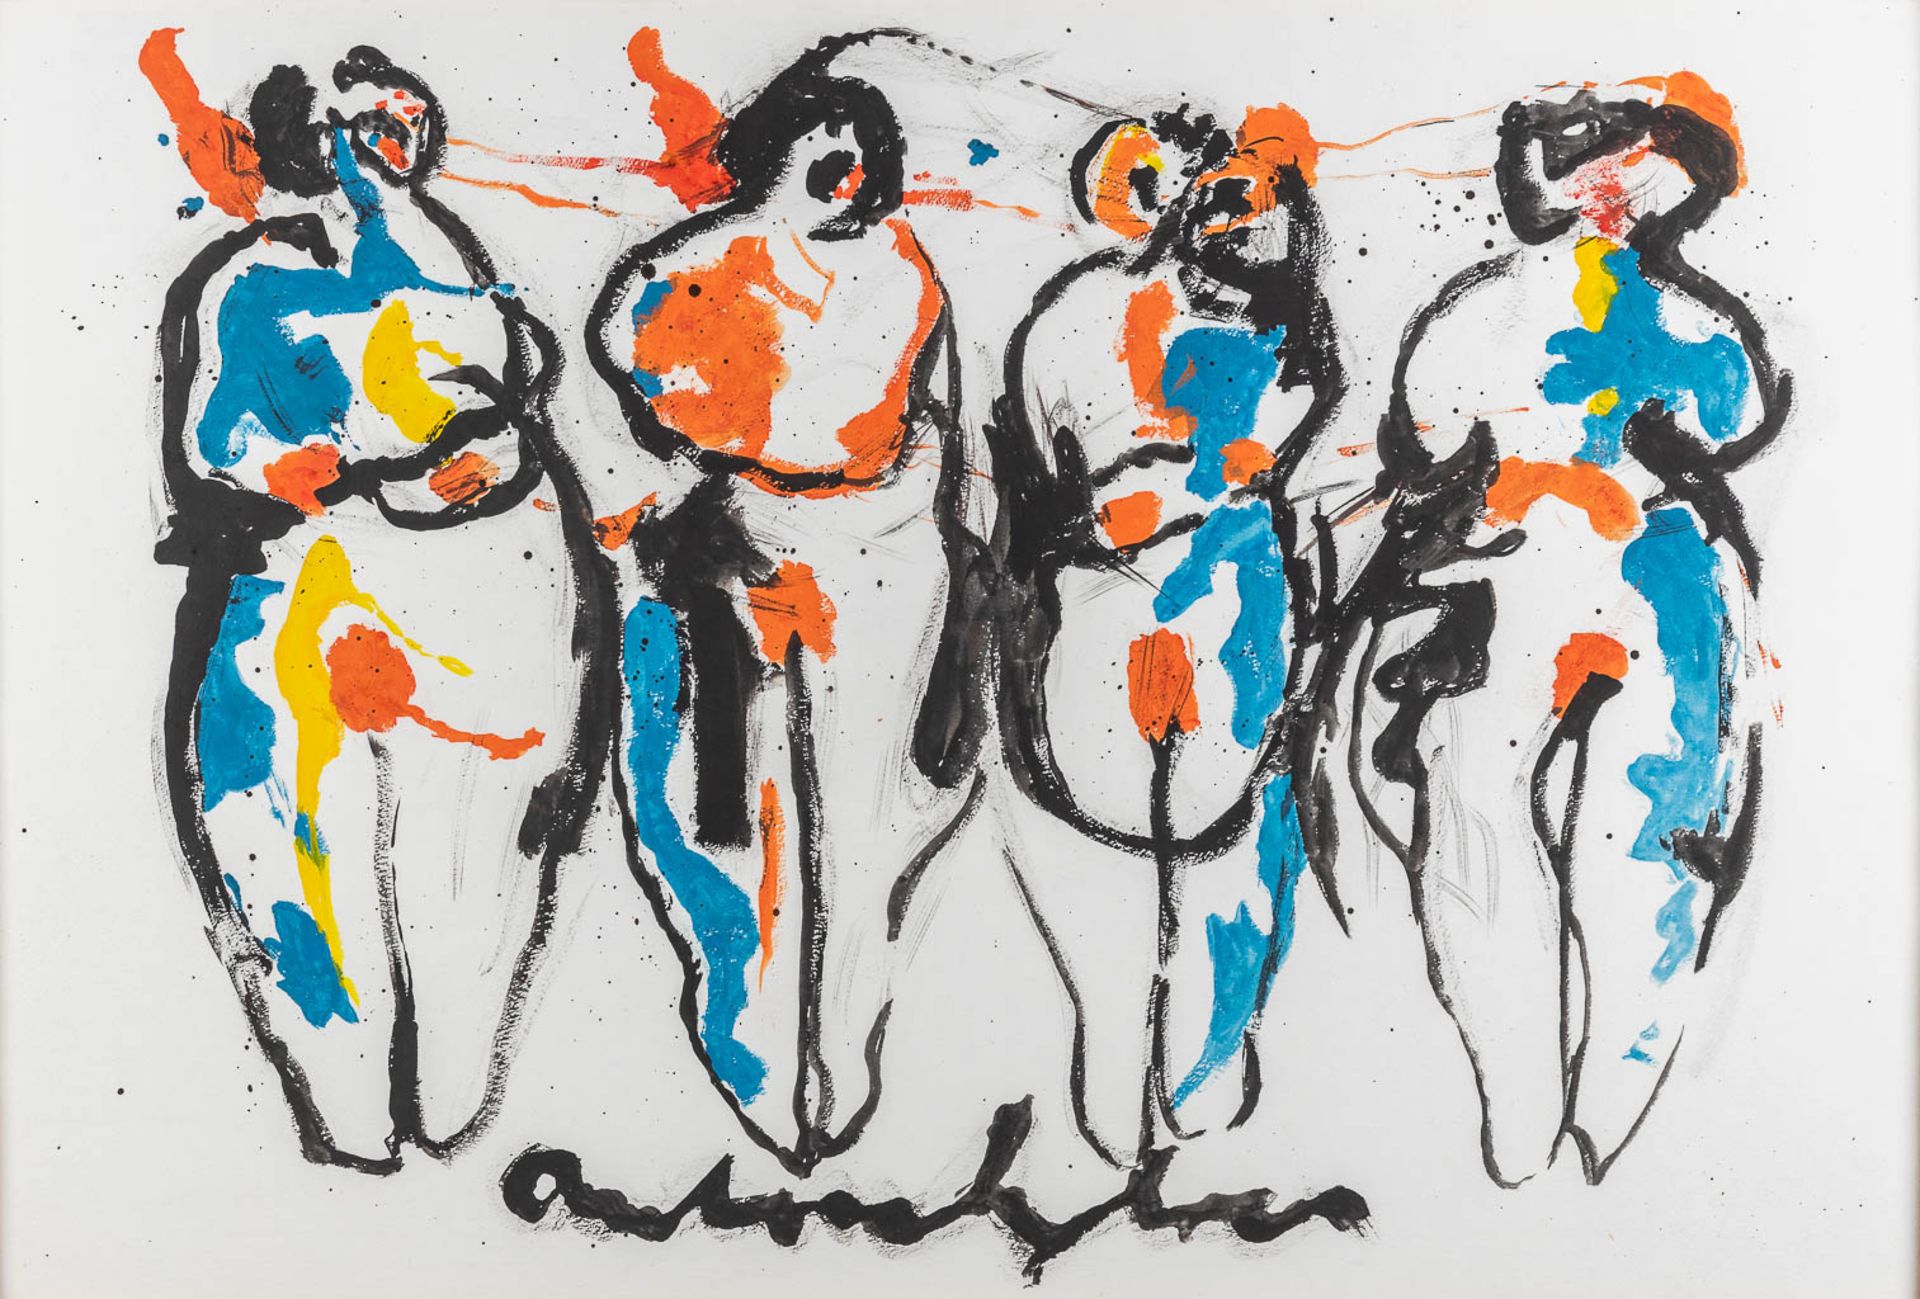 Anton HEIJBOER (1924-2005) '4 Figurines' watercolour on paper. (W: 108 x H: 74 cm)